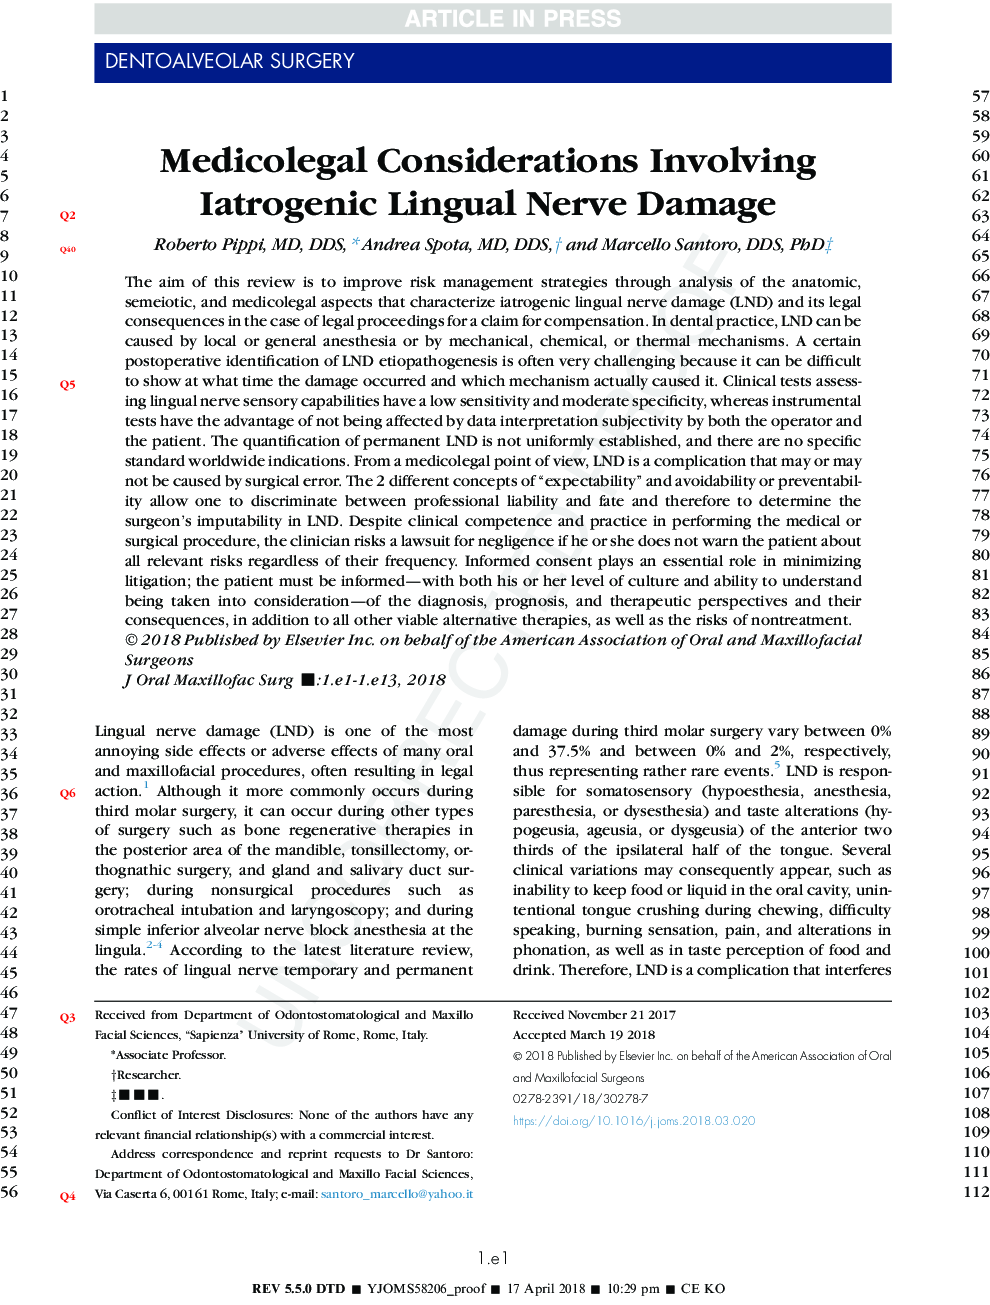 Medicolegal Considerations Involving Iatrogenic Lingual Nerve Damage